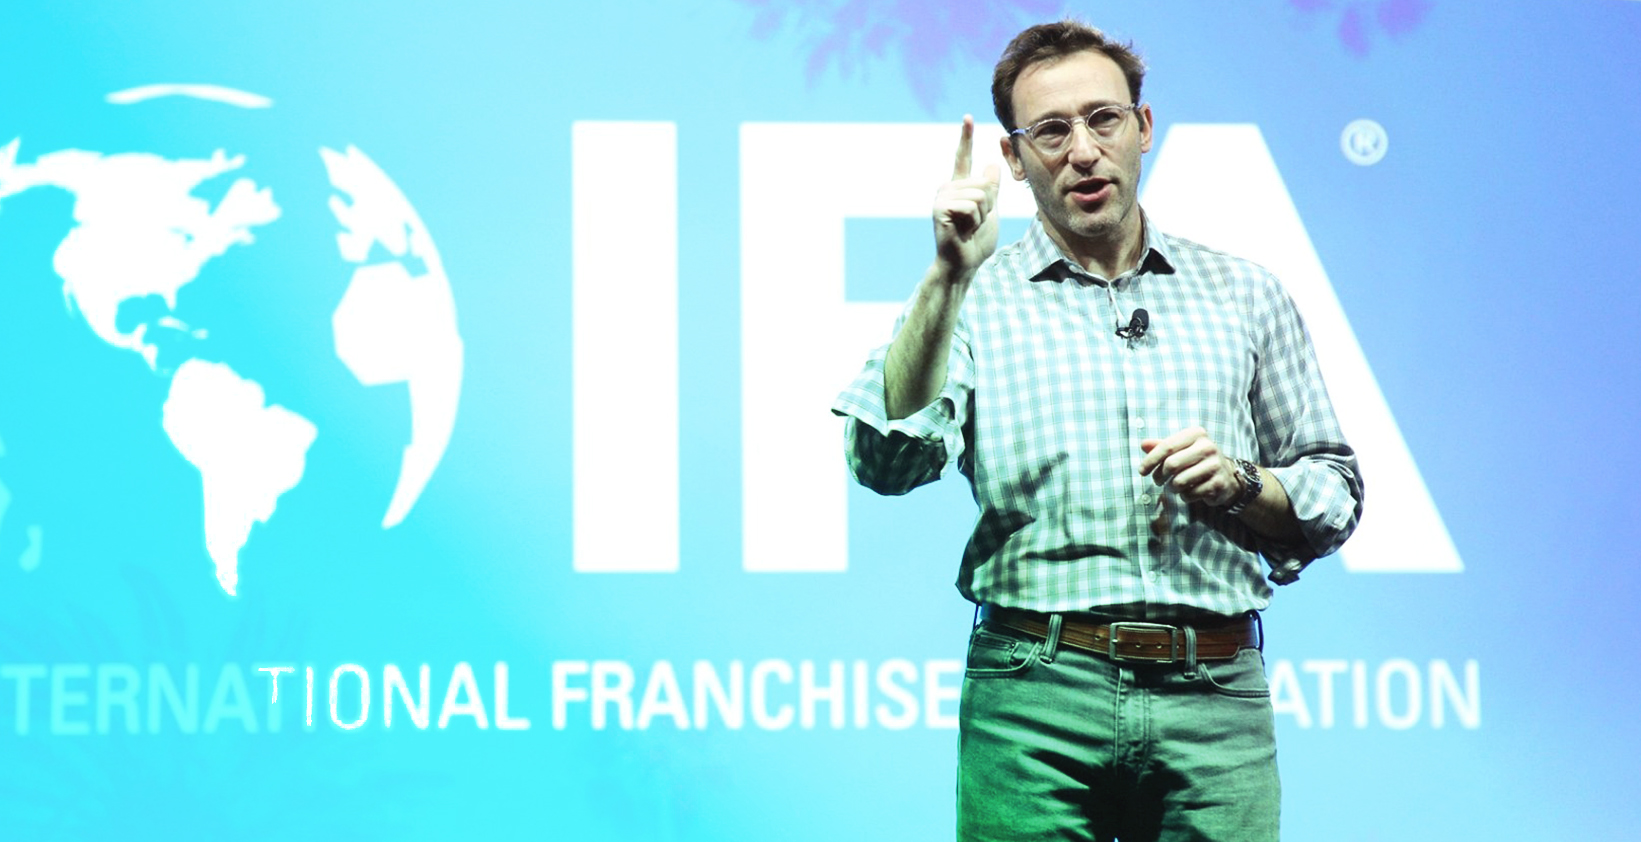 Simon Sinek speaking at International Franchise Association 2020 conference in Orlando, FL